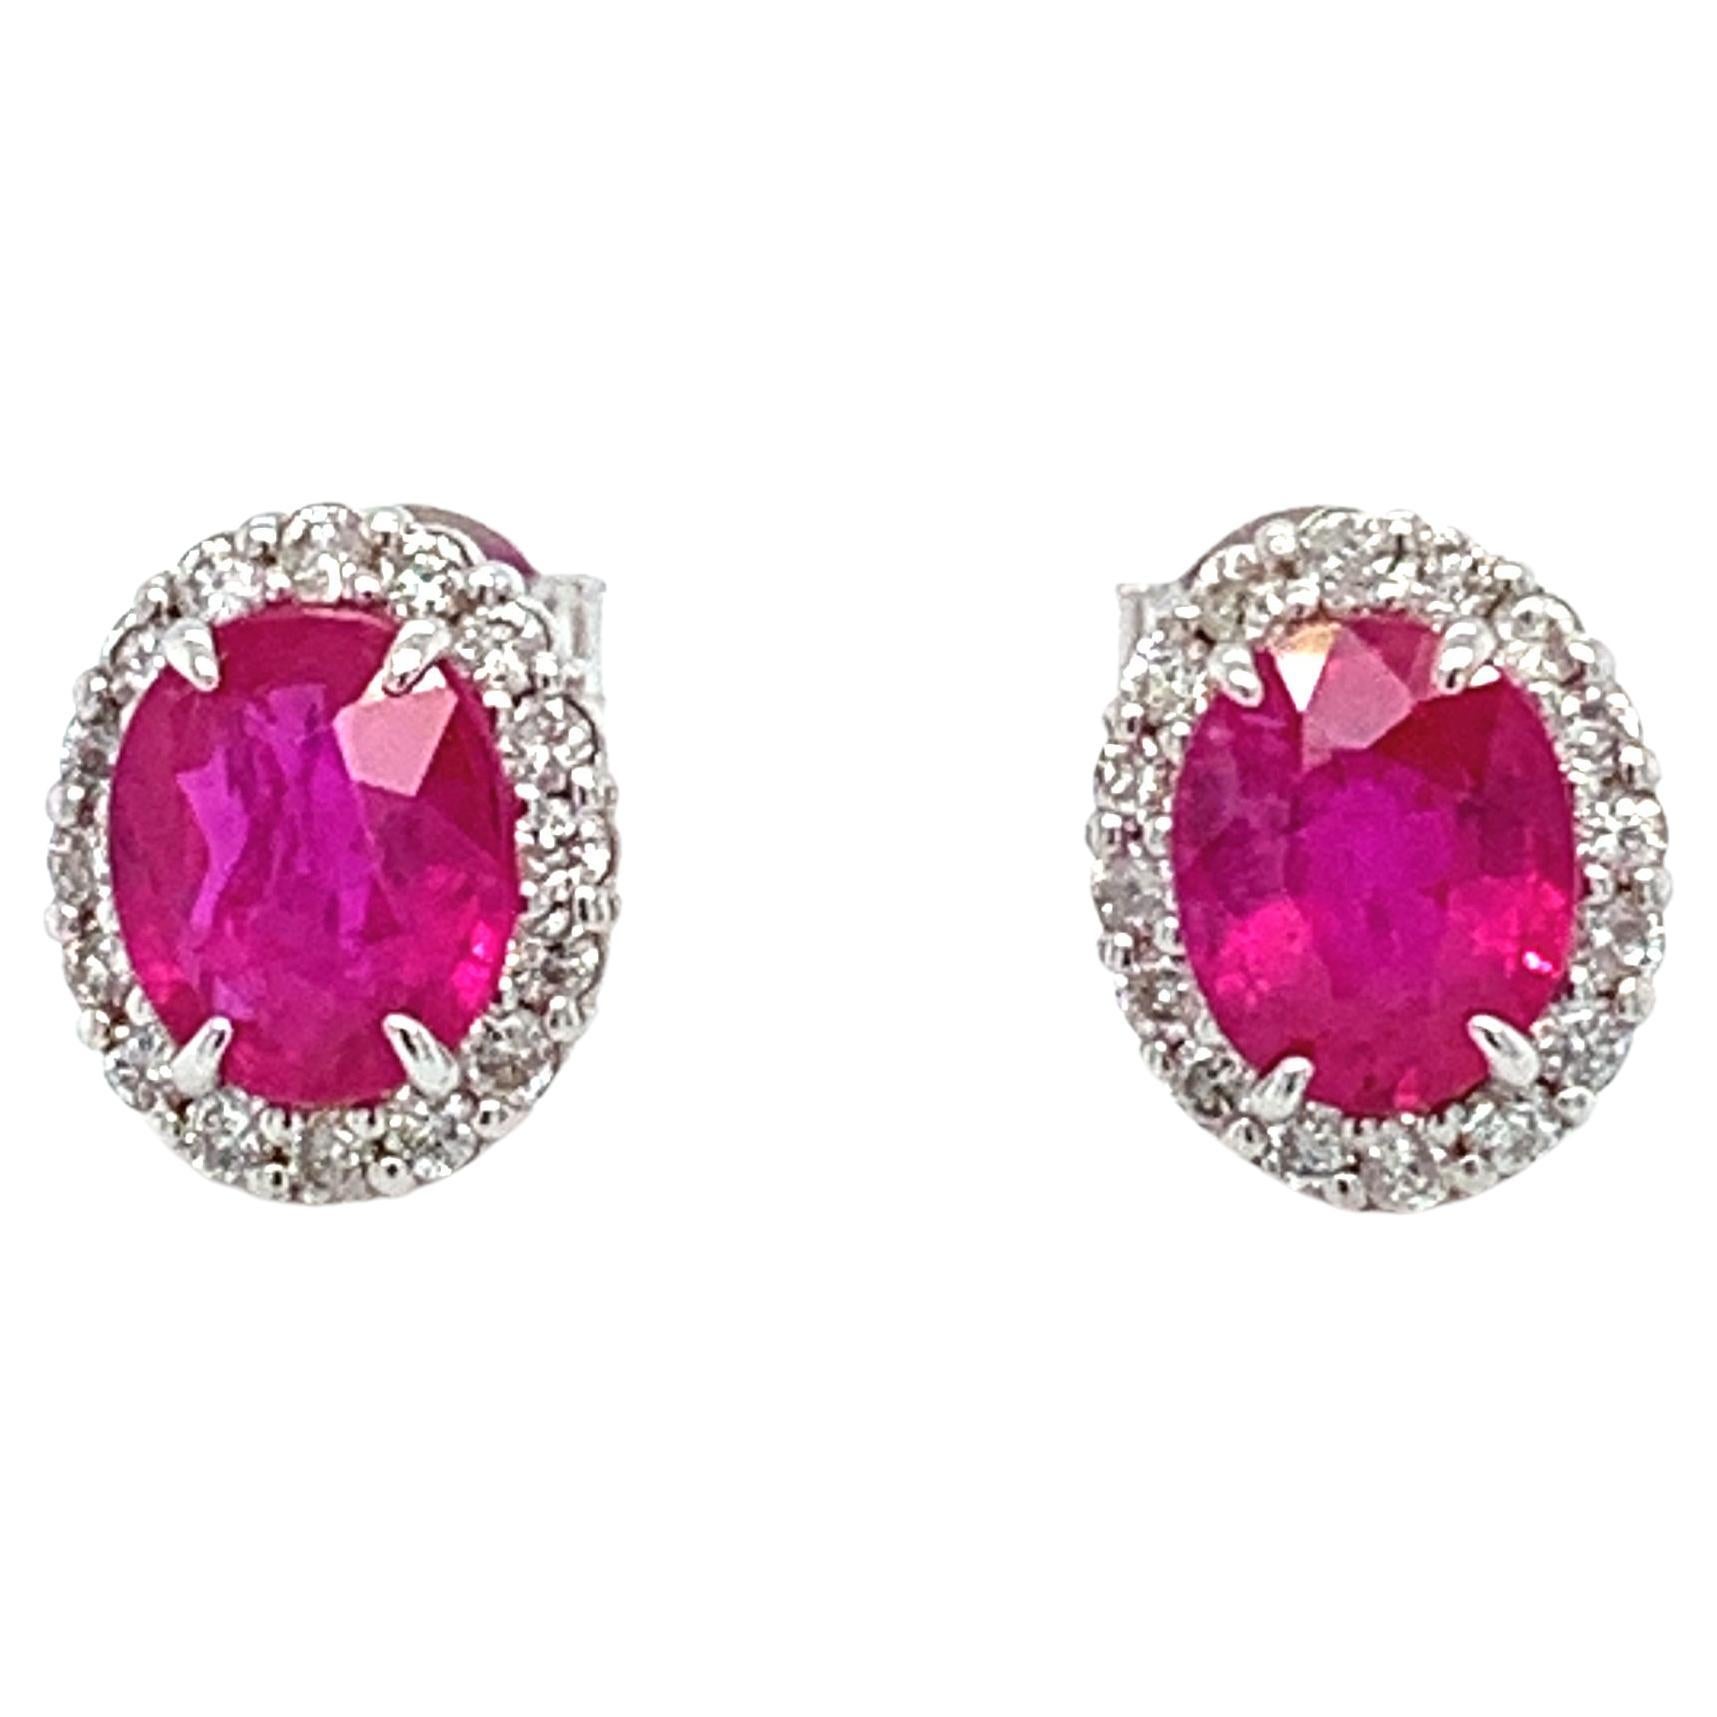 Ruby diamond halo art deco studs earrings 18k white gold For Sale